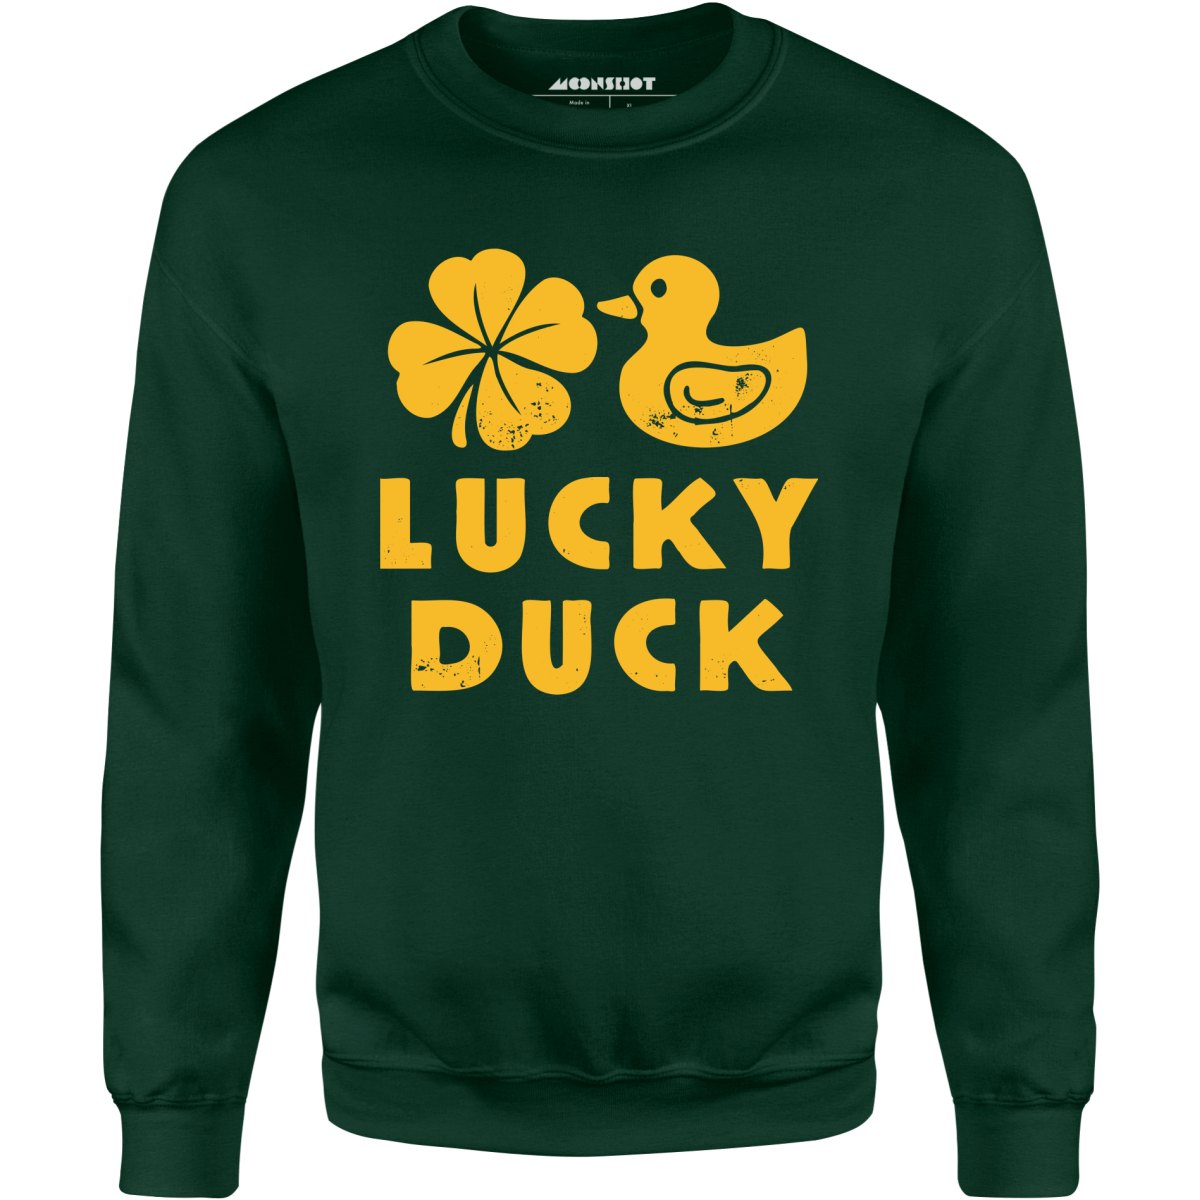 Lucky Duck - Unisex Sweatshirt